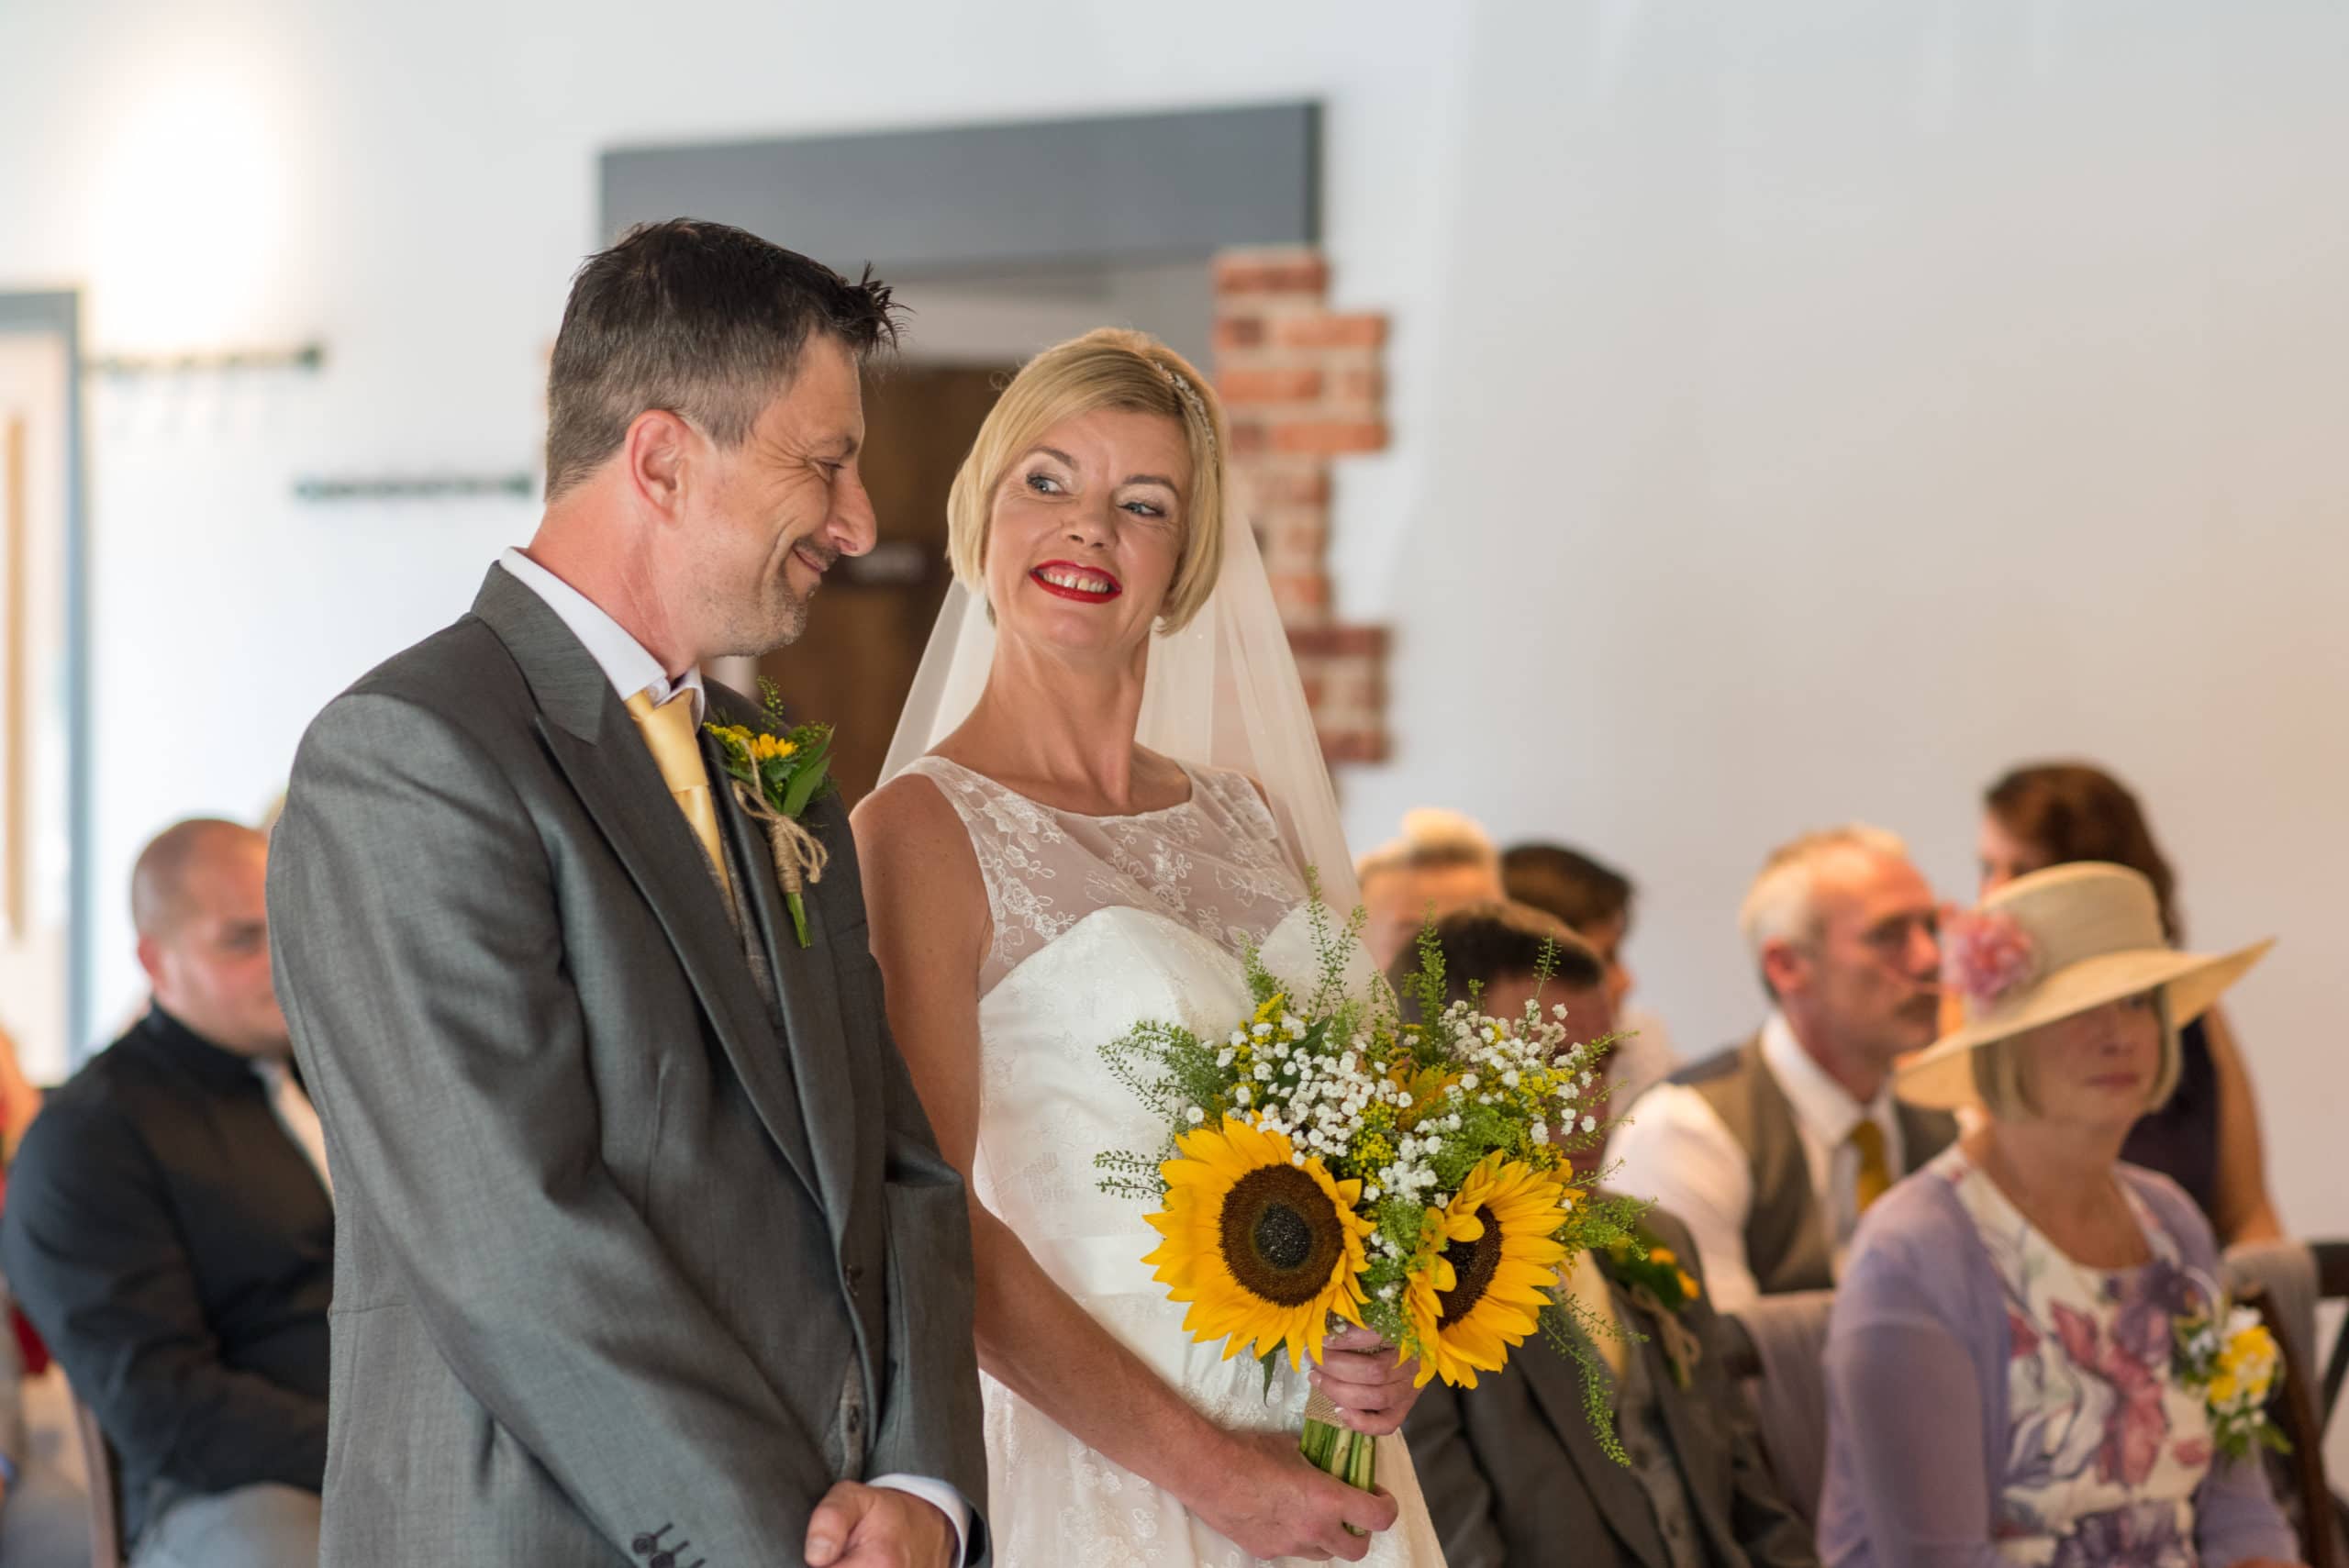 Couple enjoying their wedding with sunflower